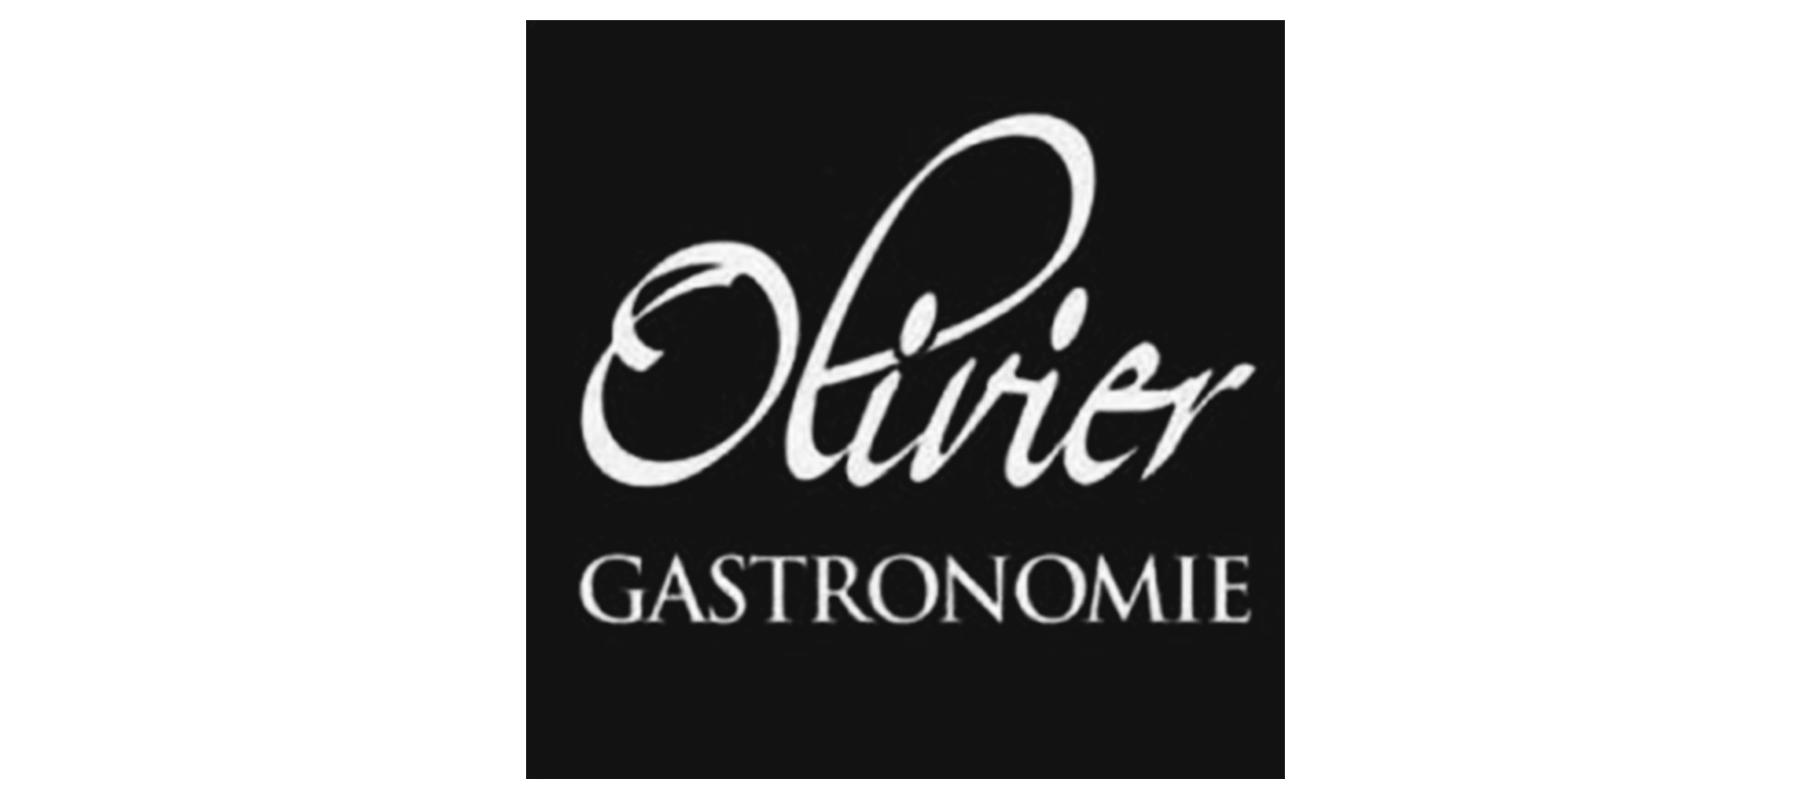 Olivier Gastronomie